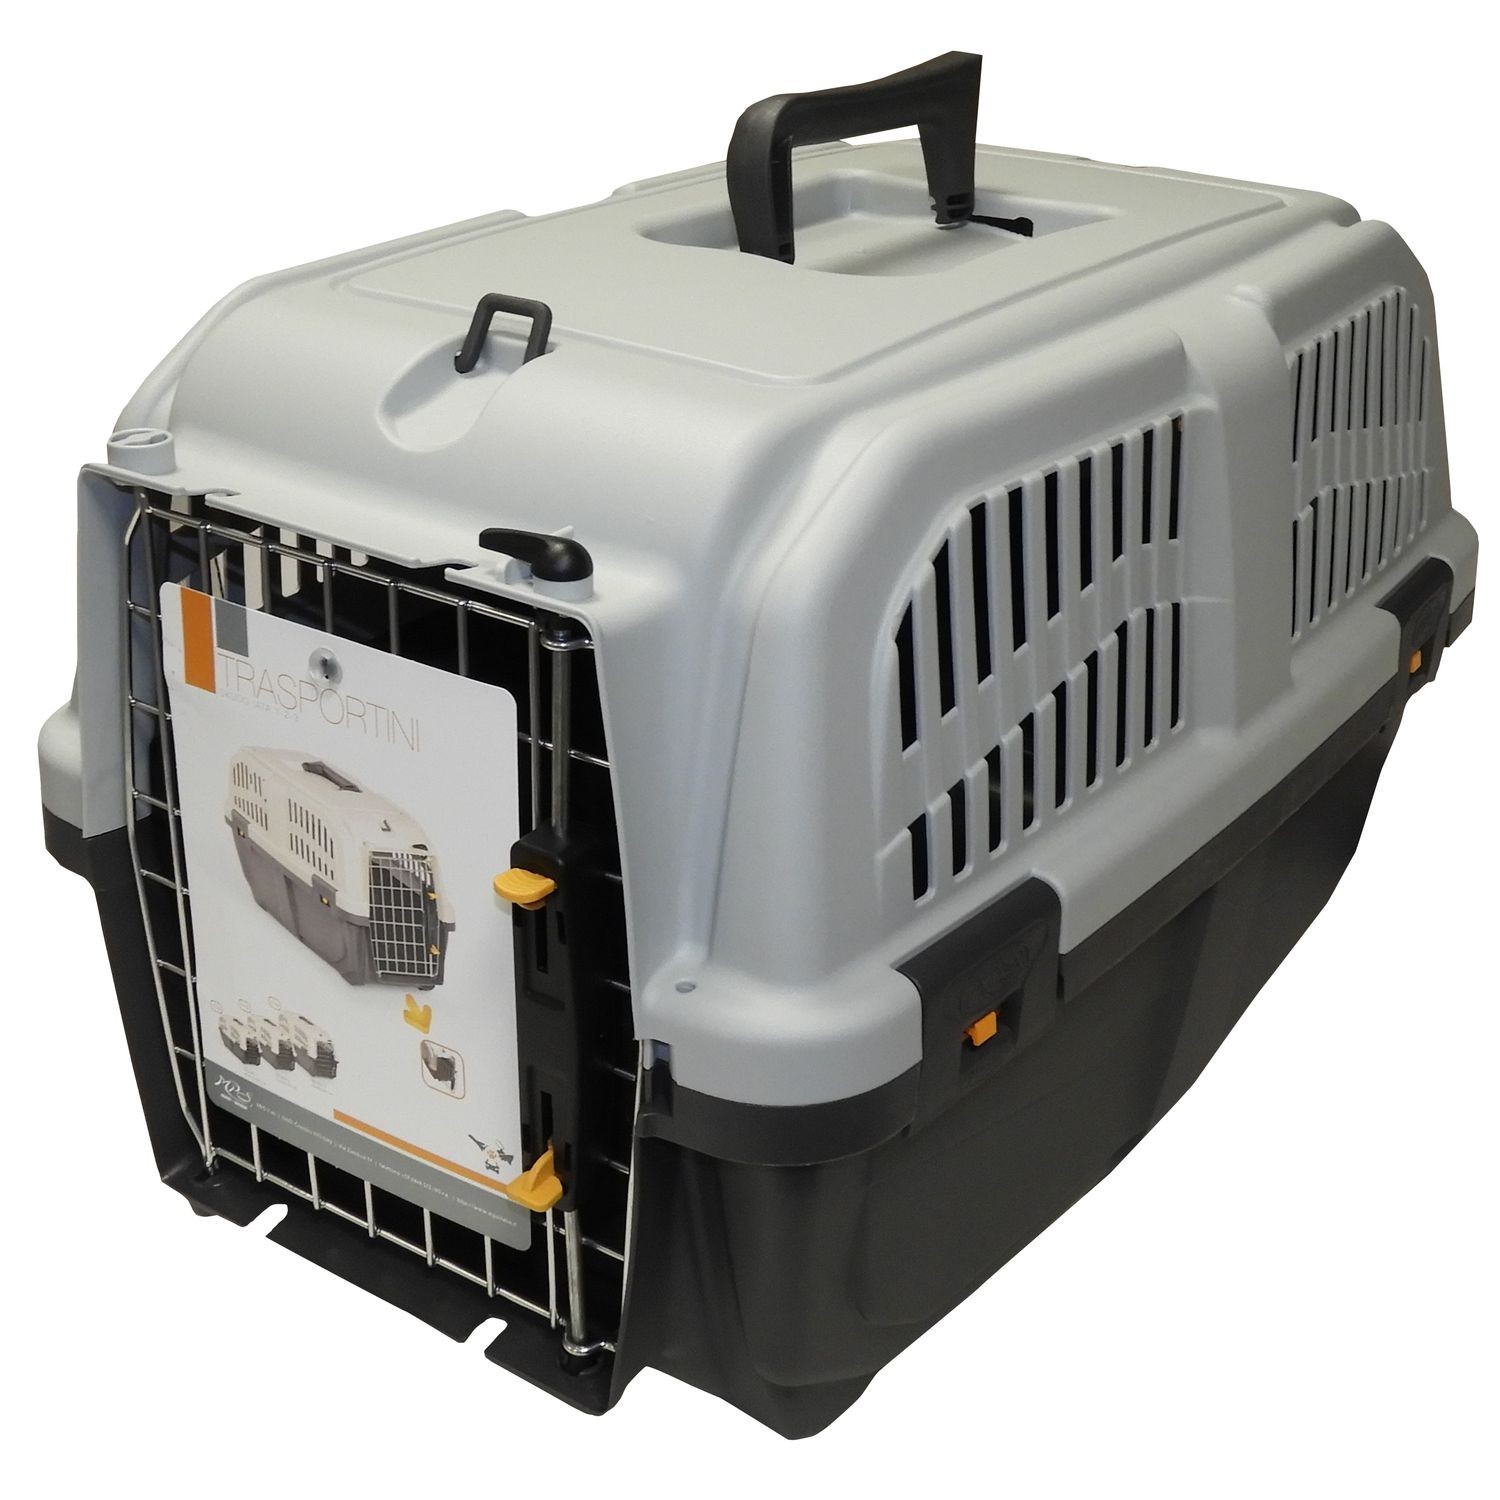 Transportbox Skudo IATA, voor honden en katten - conform IATA-normen